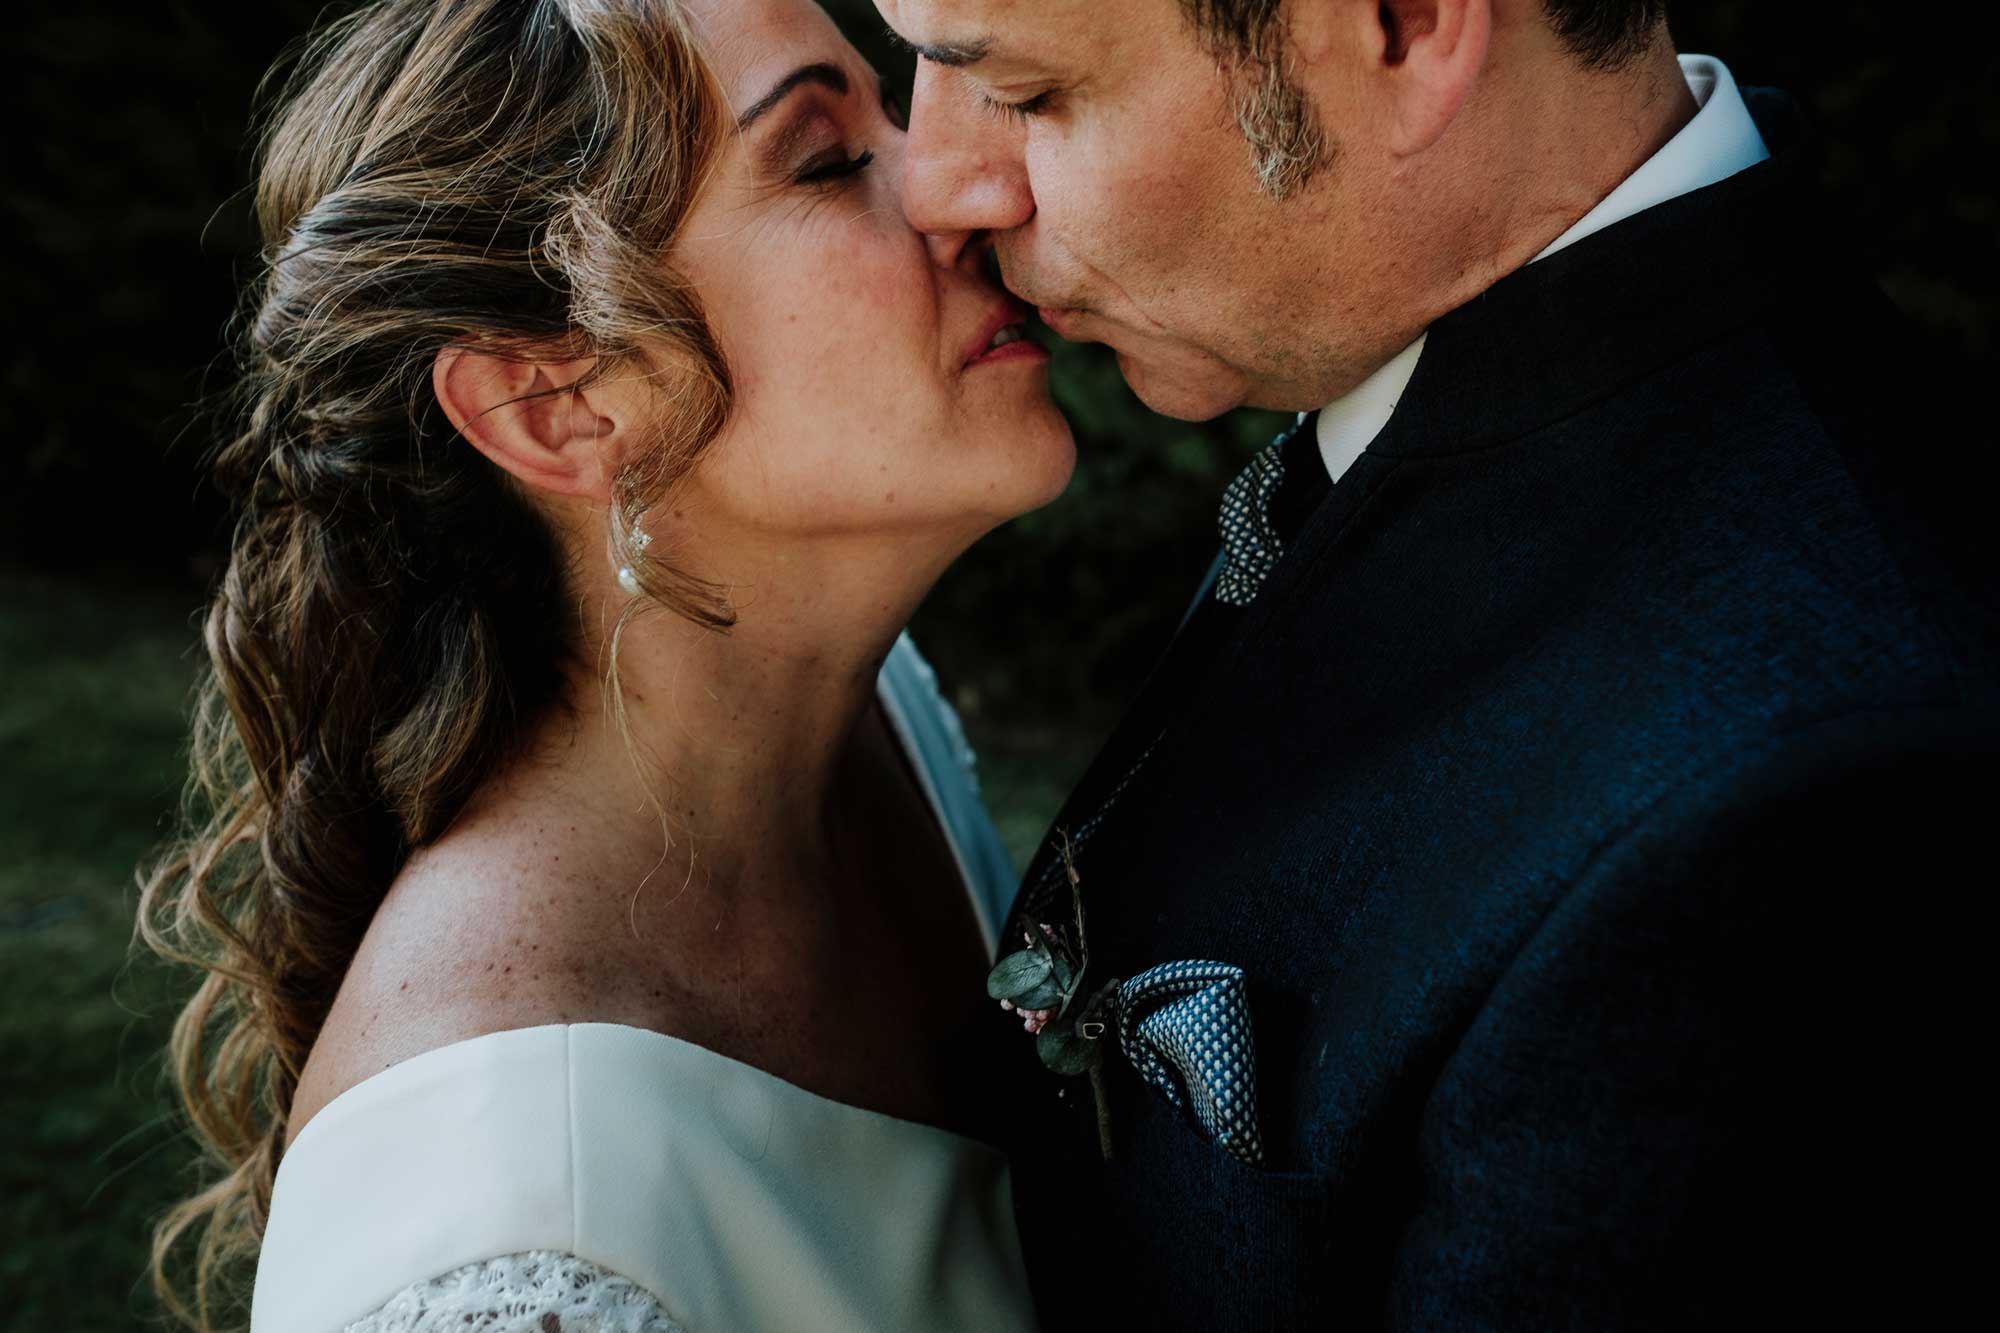 Boda en Olmedo - Fotógrafo de bodas